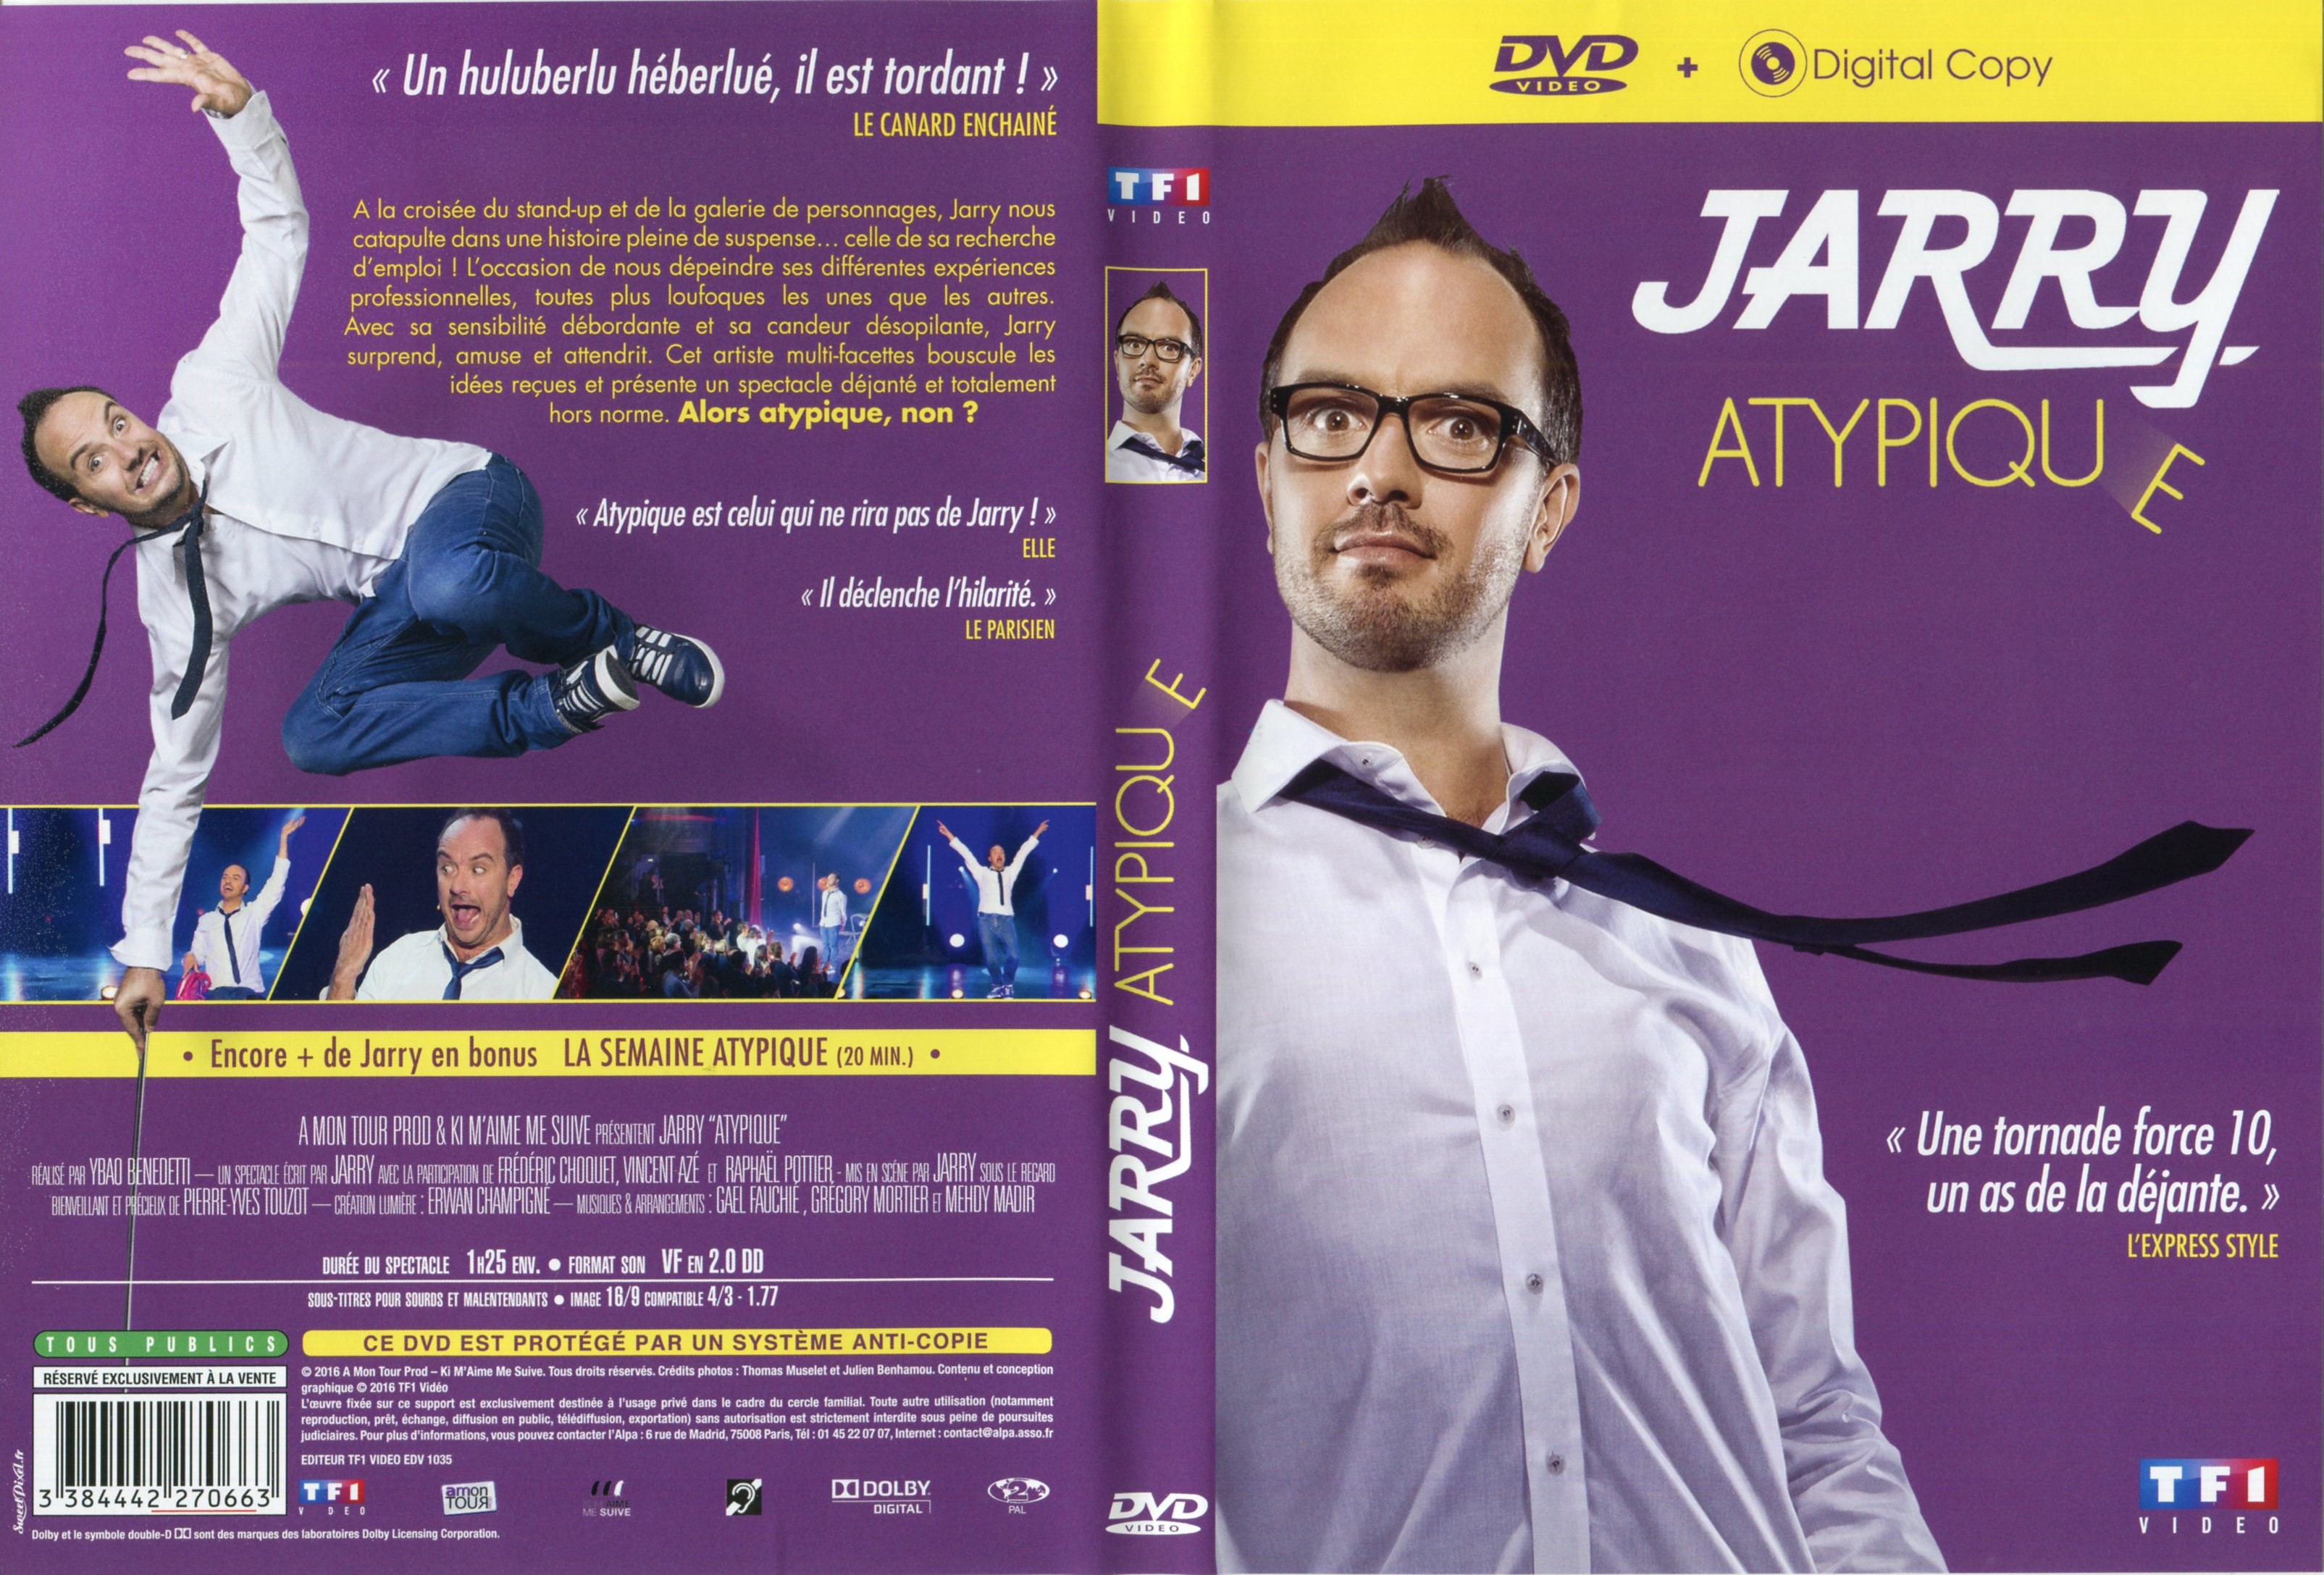 Jaquette DVD Jarry atypique